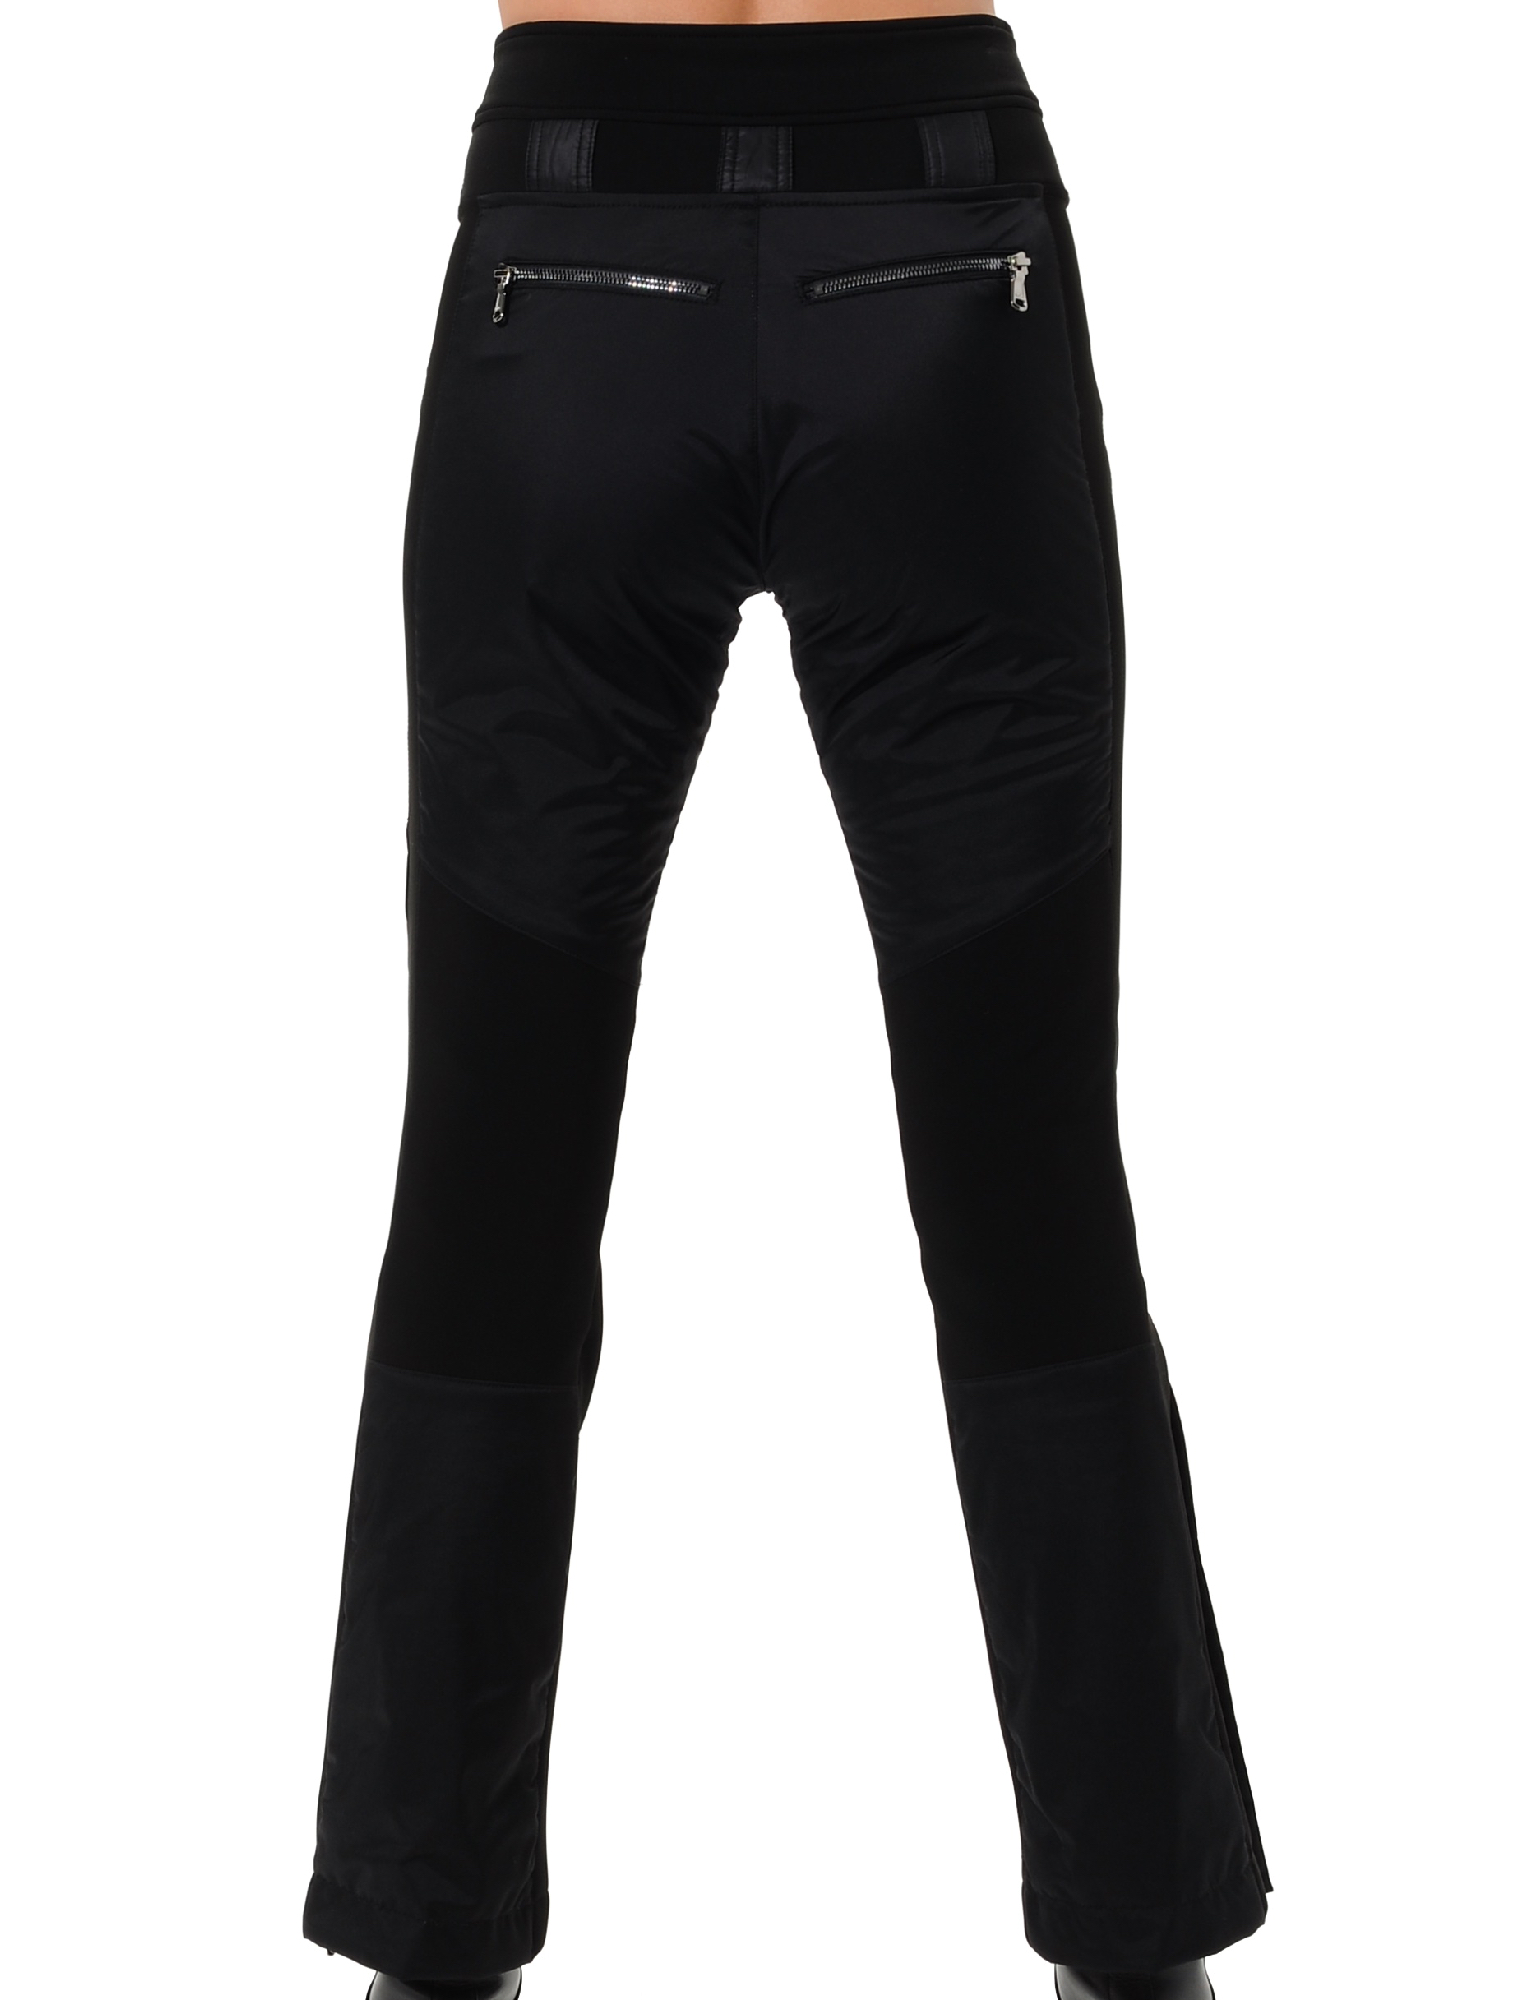 stretch ski pants white/black